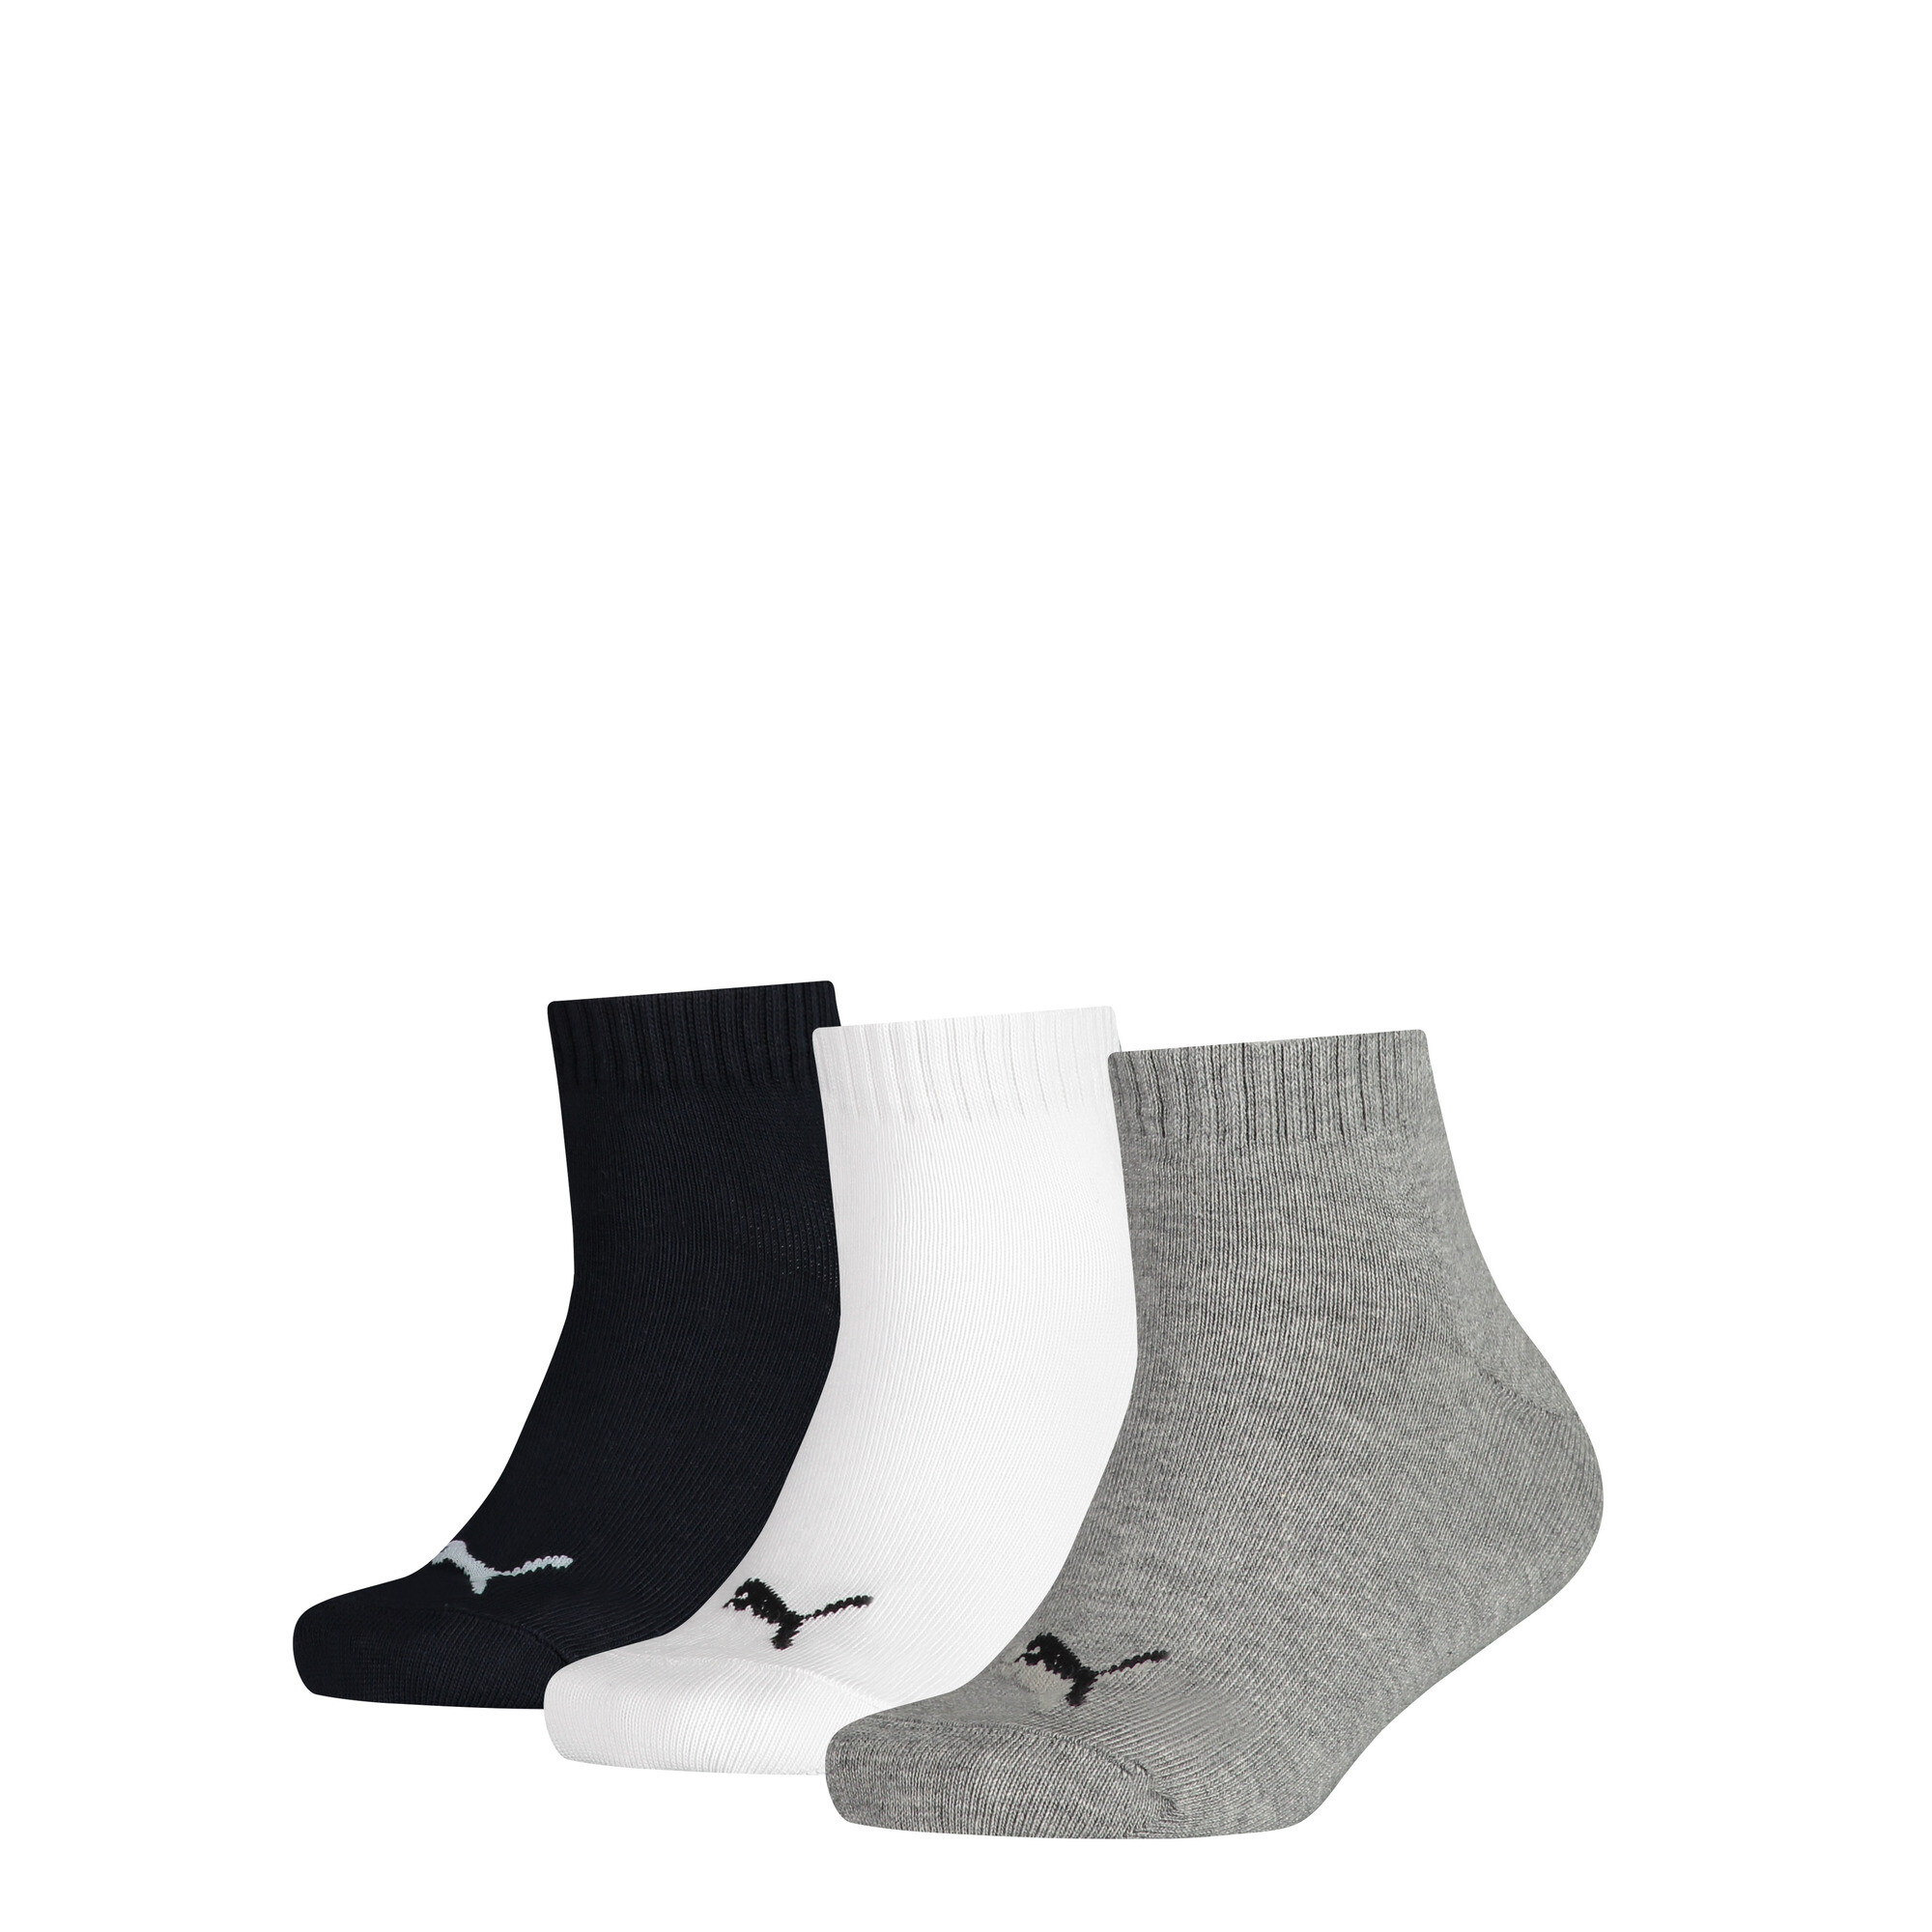 Kids' PUMA Quarter Socks 3 Pack In Grey/White/Black, Size 35-38